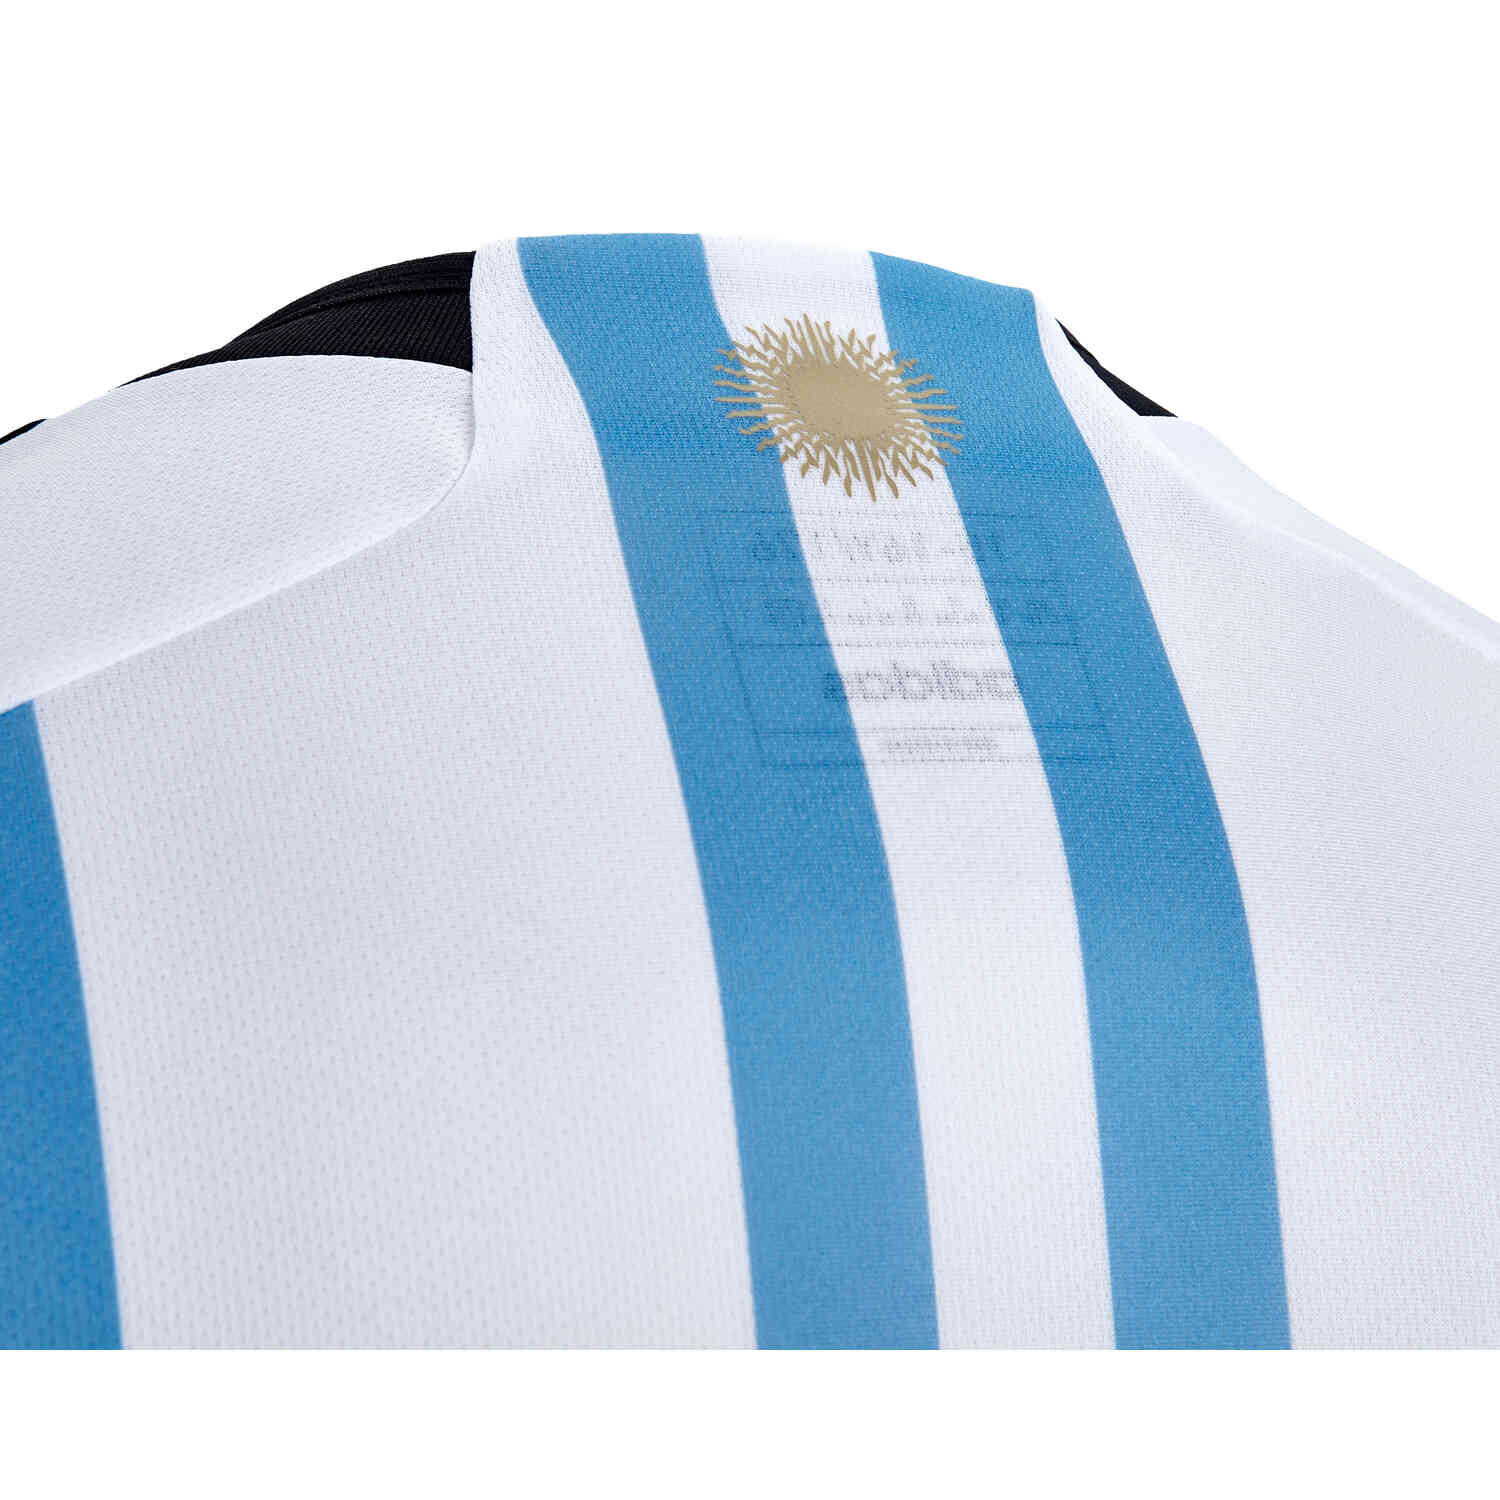 2022 Kids adidas Argentina Home Jersey - Soccer Master